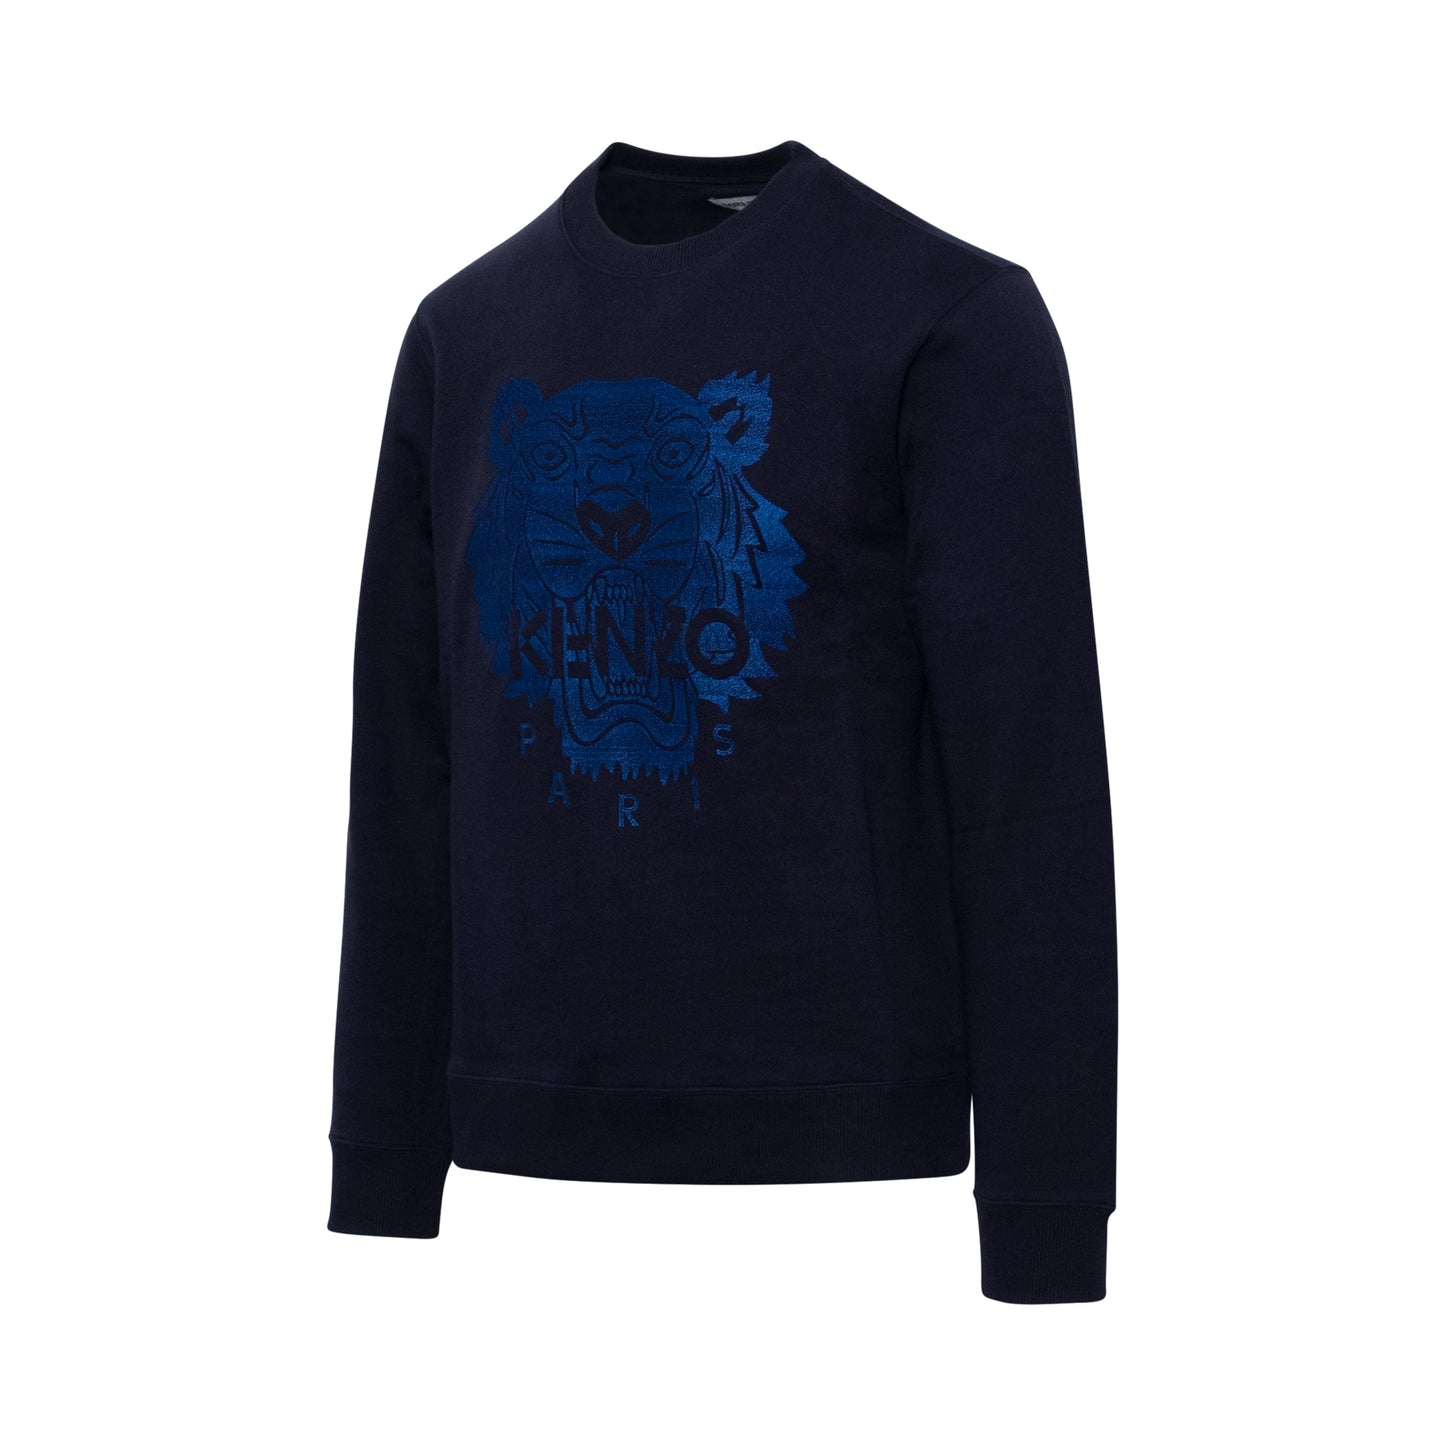 Kenzo Classic Tiger Sweatshirt in Navy Blue